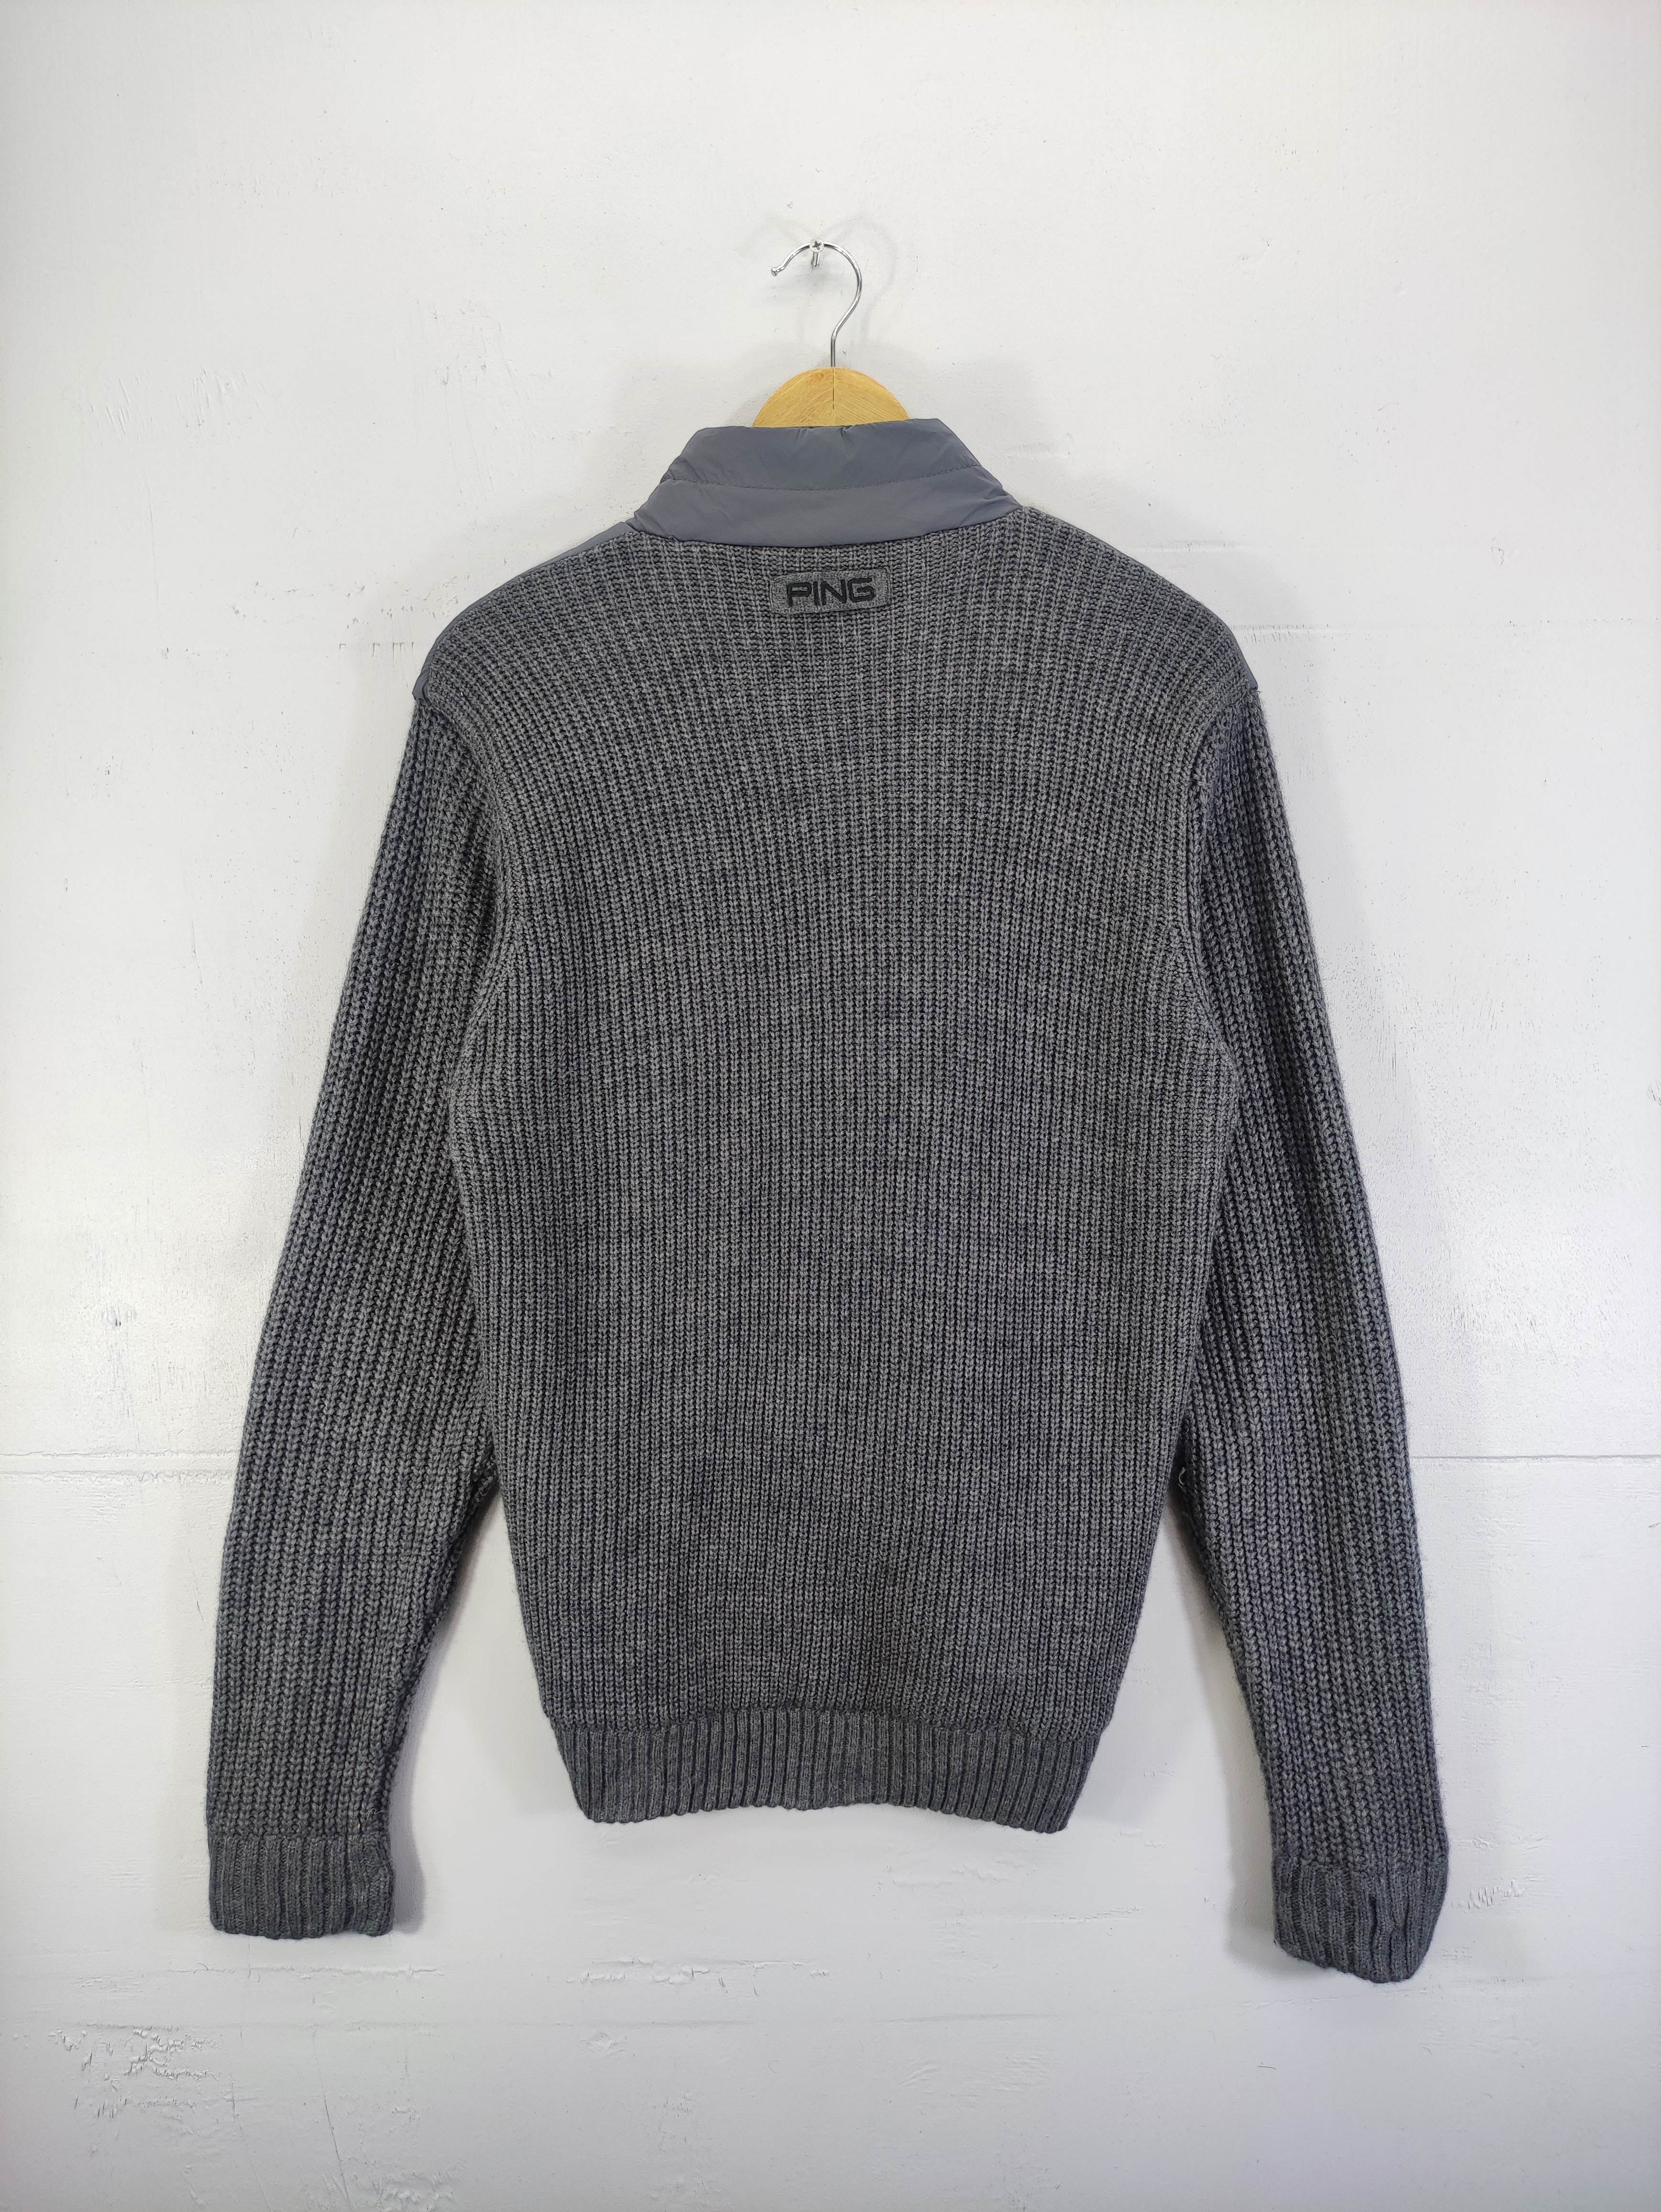 Vintage Ping Sweater Jacket knit Sleeve Zipper - 11